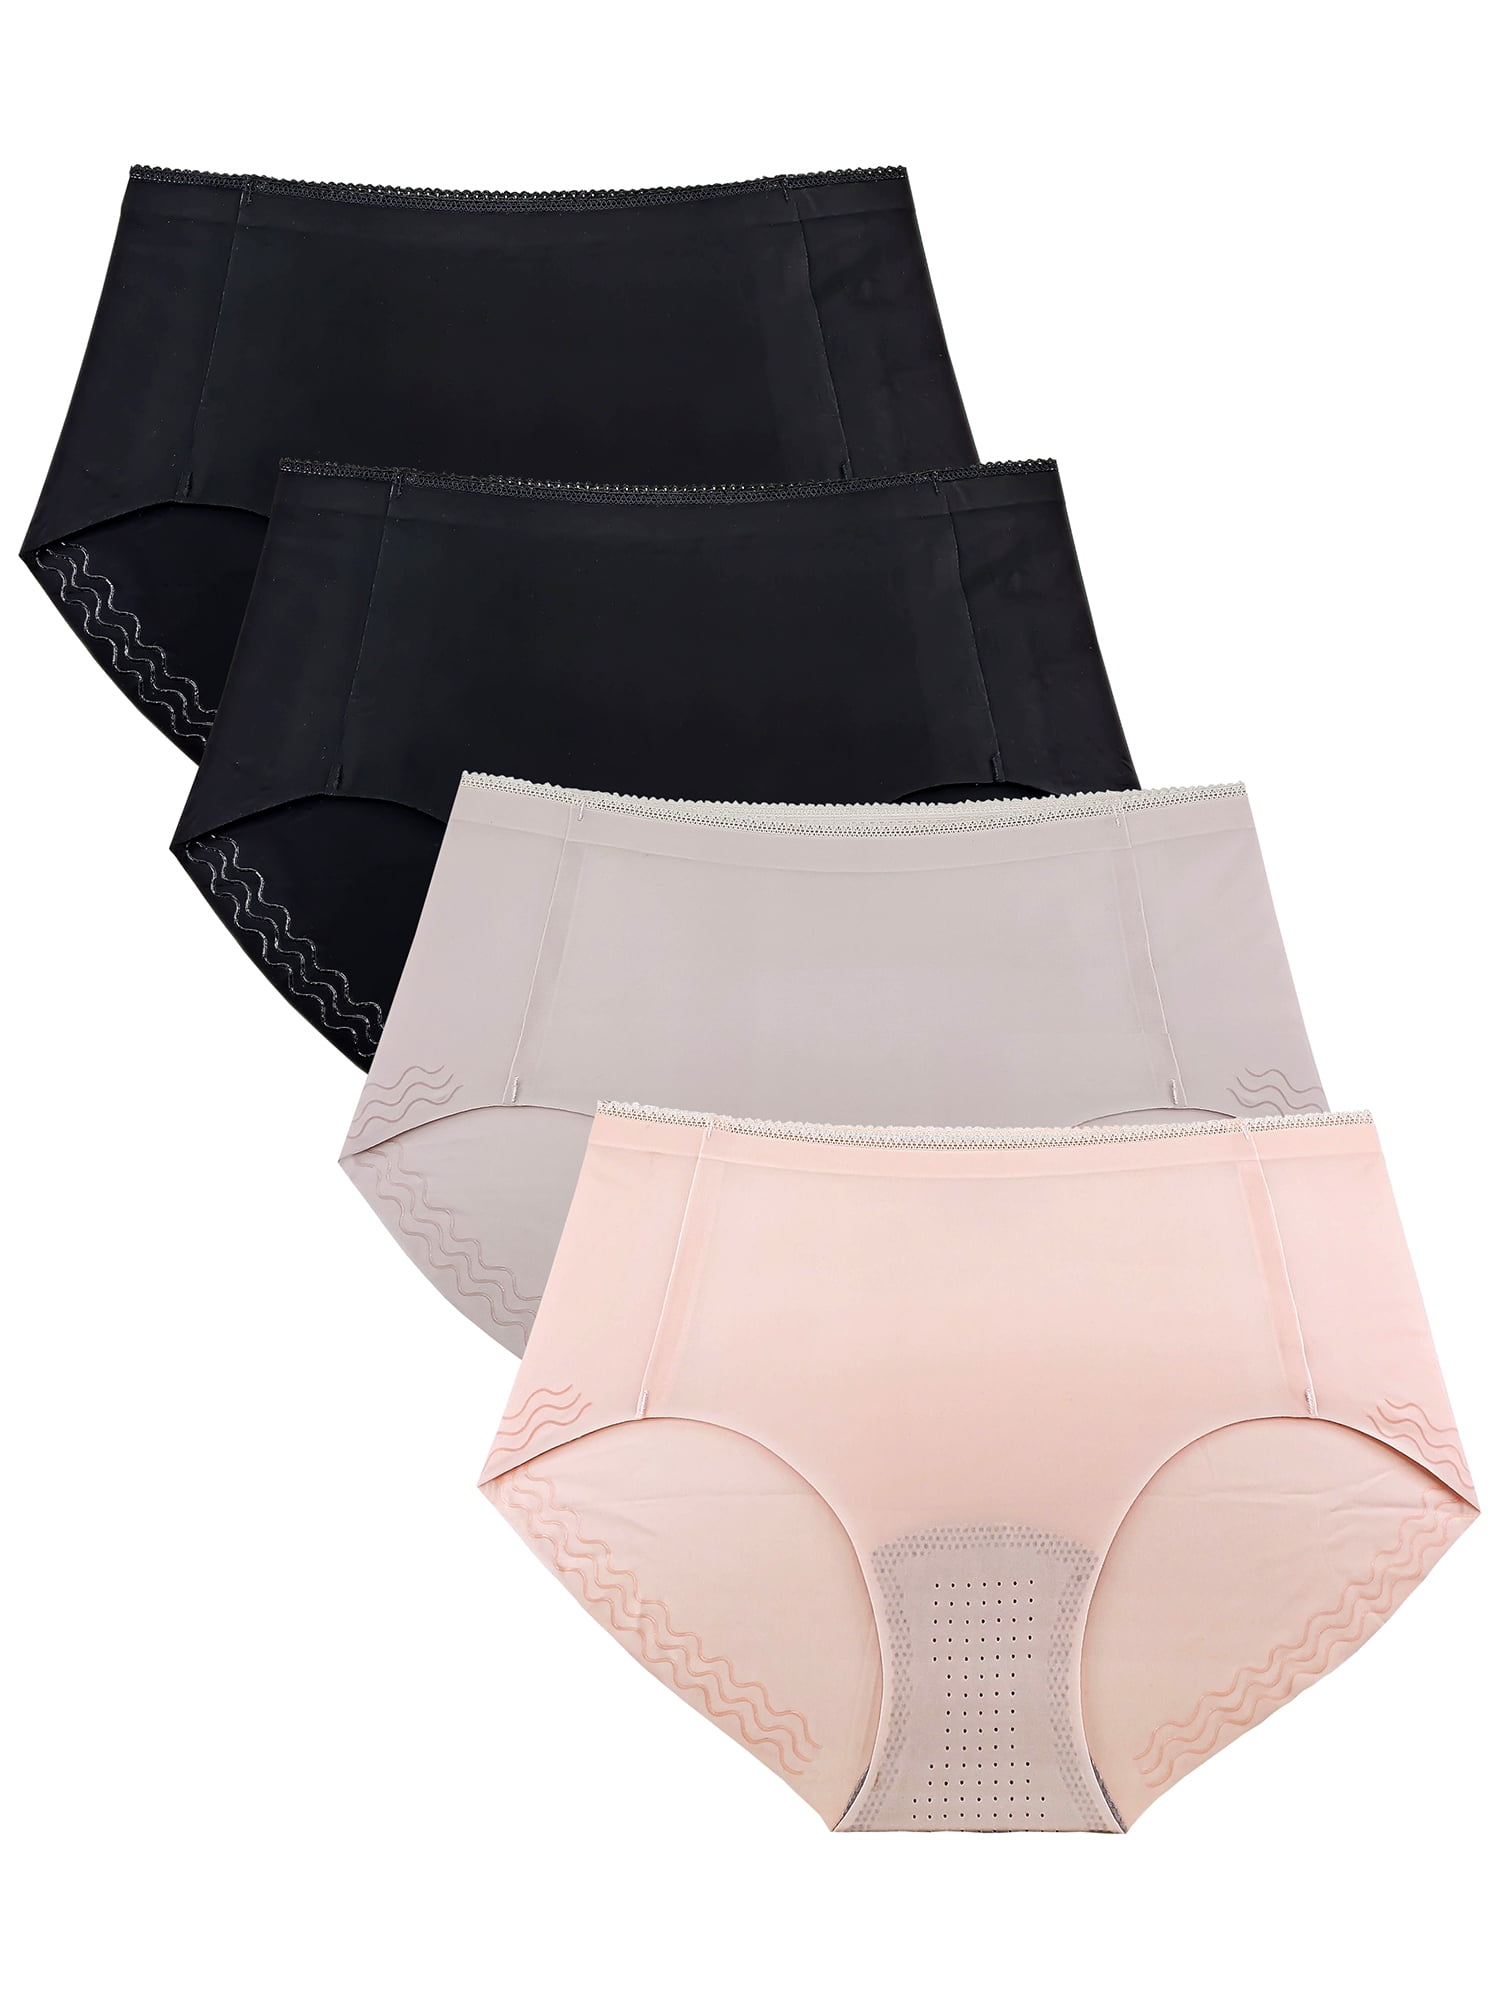 B2BODY Women's Panties Microfiber Silicone Edge Hipsters XS-3X Plus ...